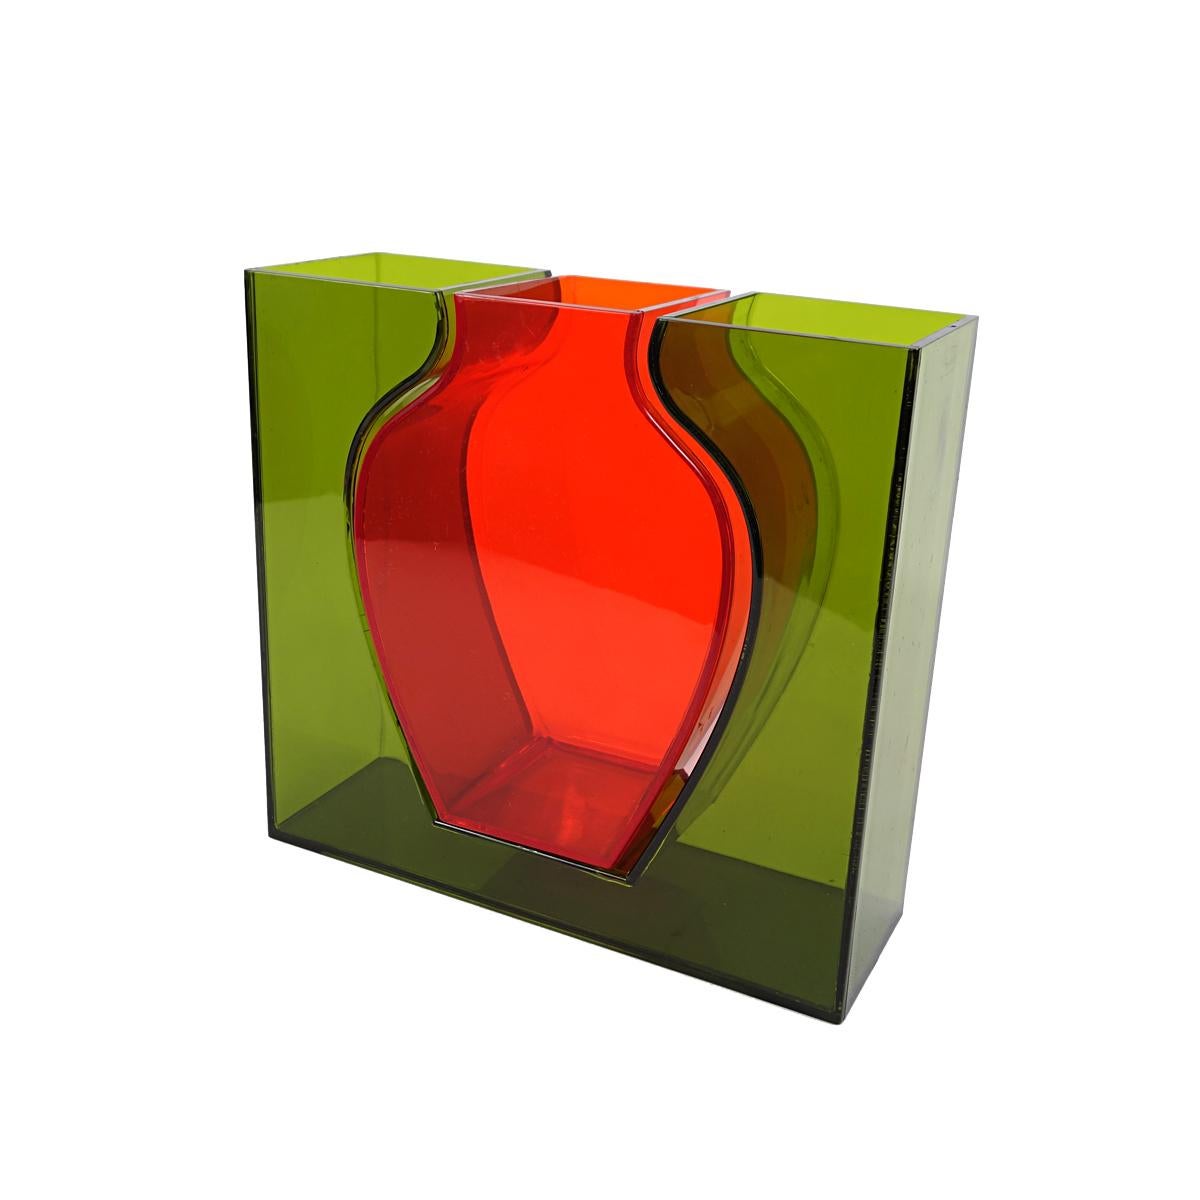 1990s Dutch Design Plexiglass Red Vase Within a Green Vase In Good Condition For Sale In Doornspijk, NL